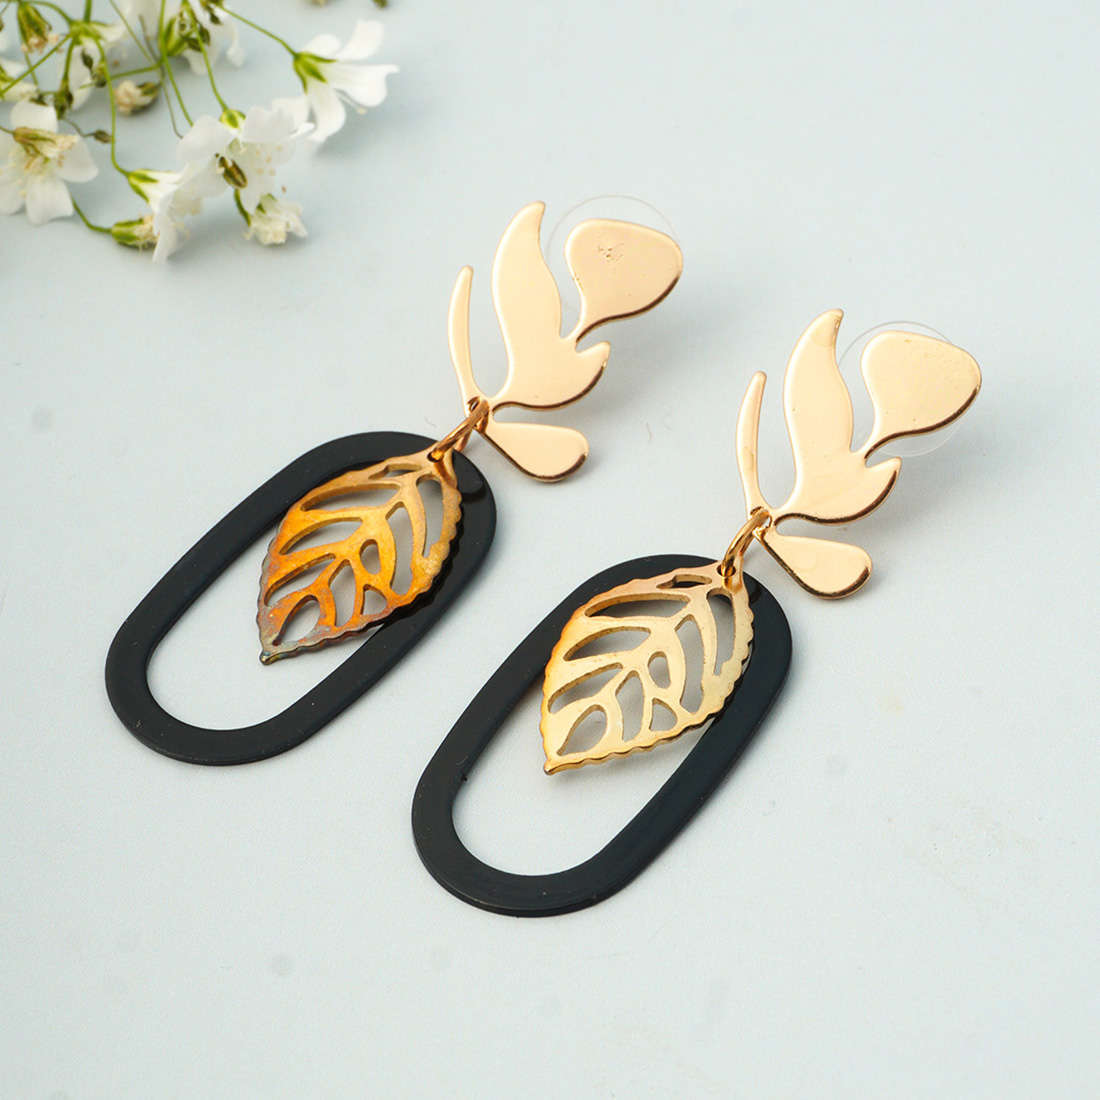 Black Ring Gold Leaf Earrings
